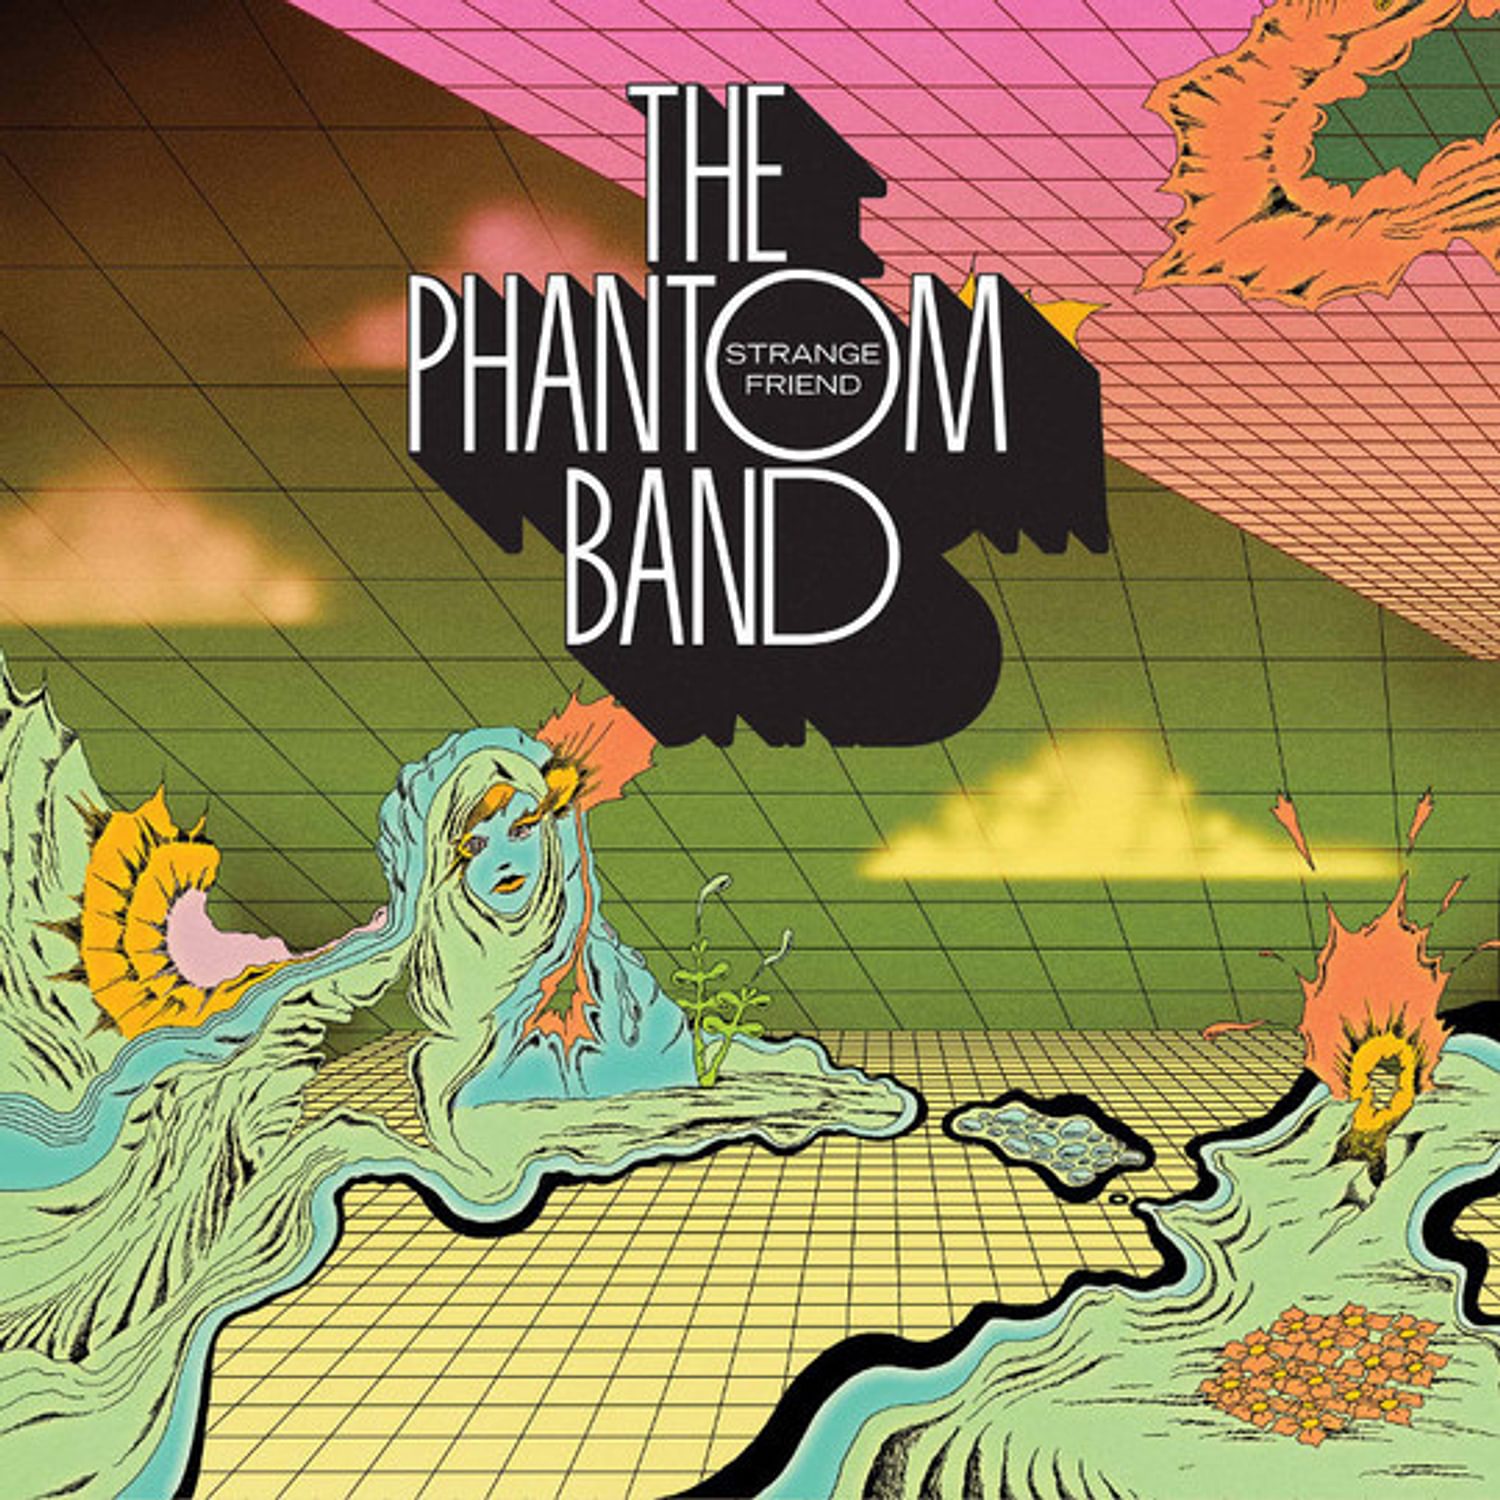 The Phantom Band - Strange Friend